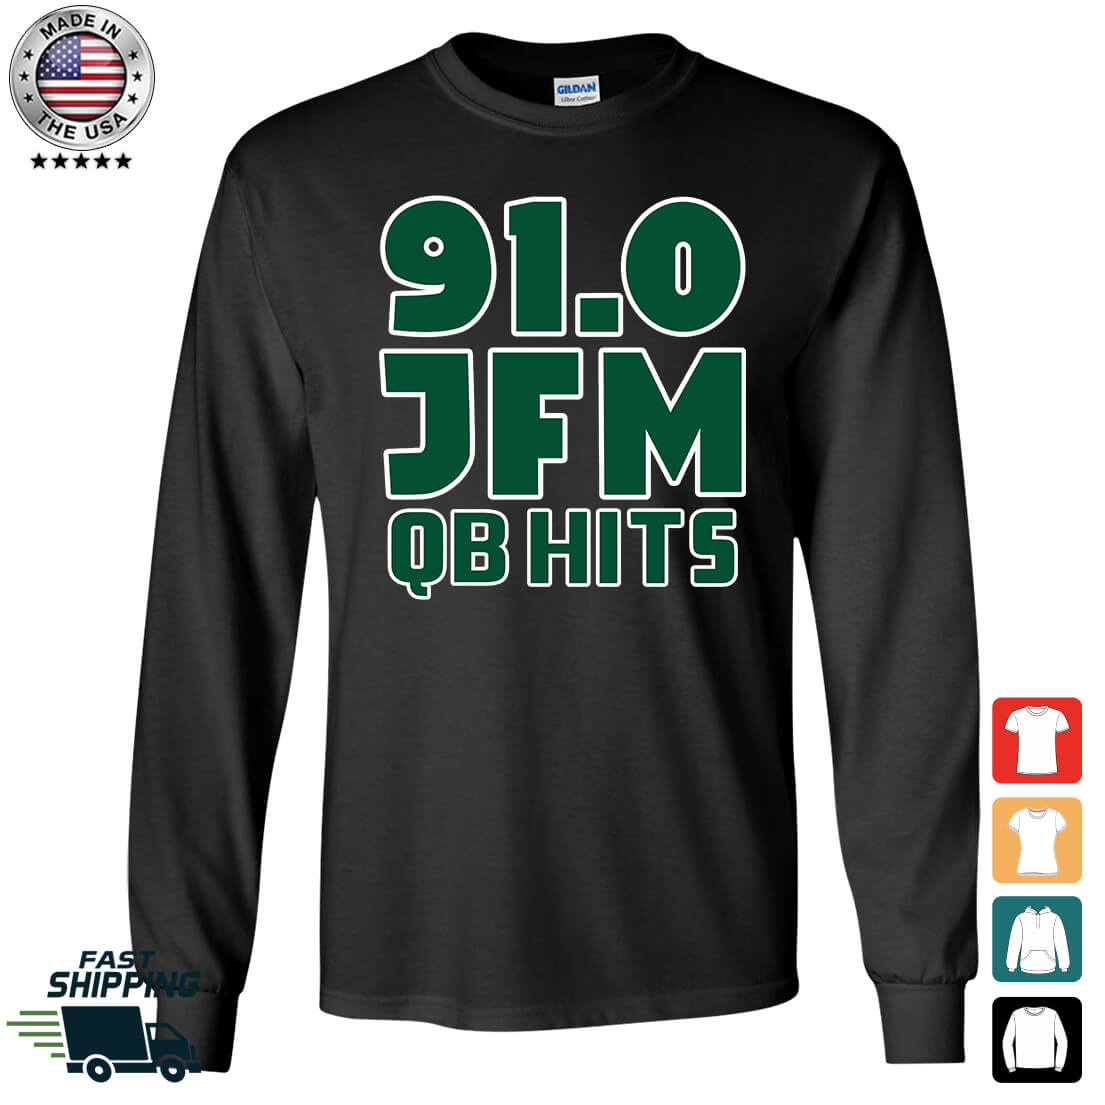 91.0 JFM QB Hist Long Sleeve Shirt